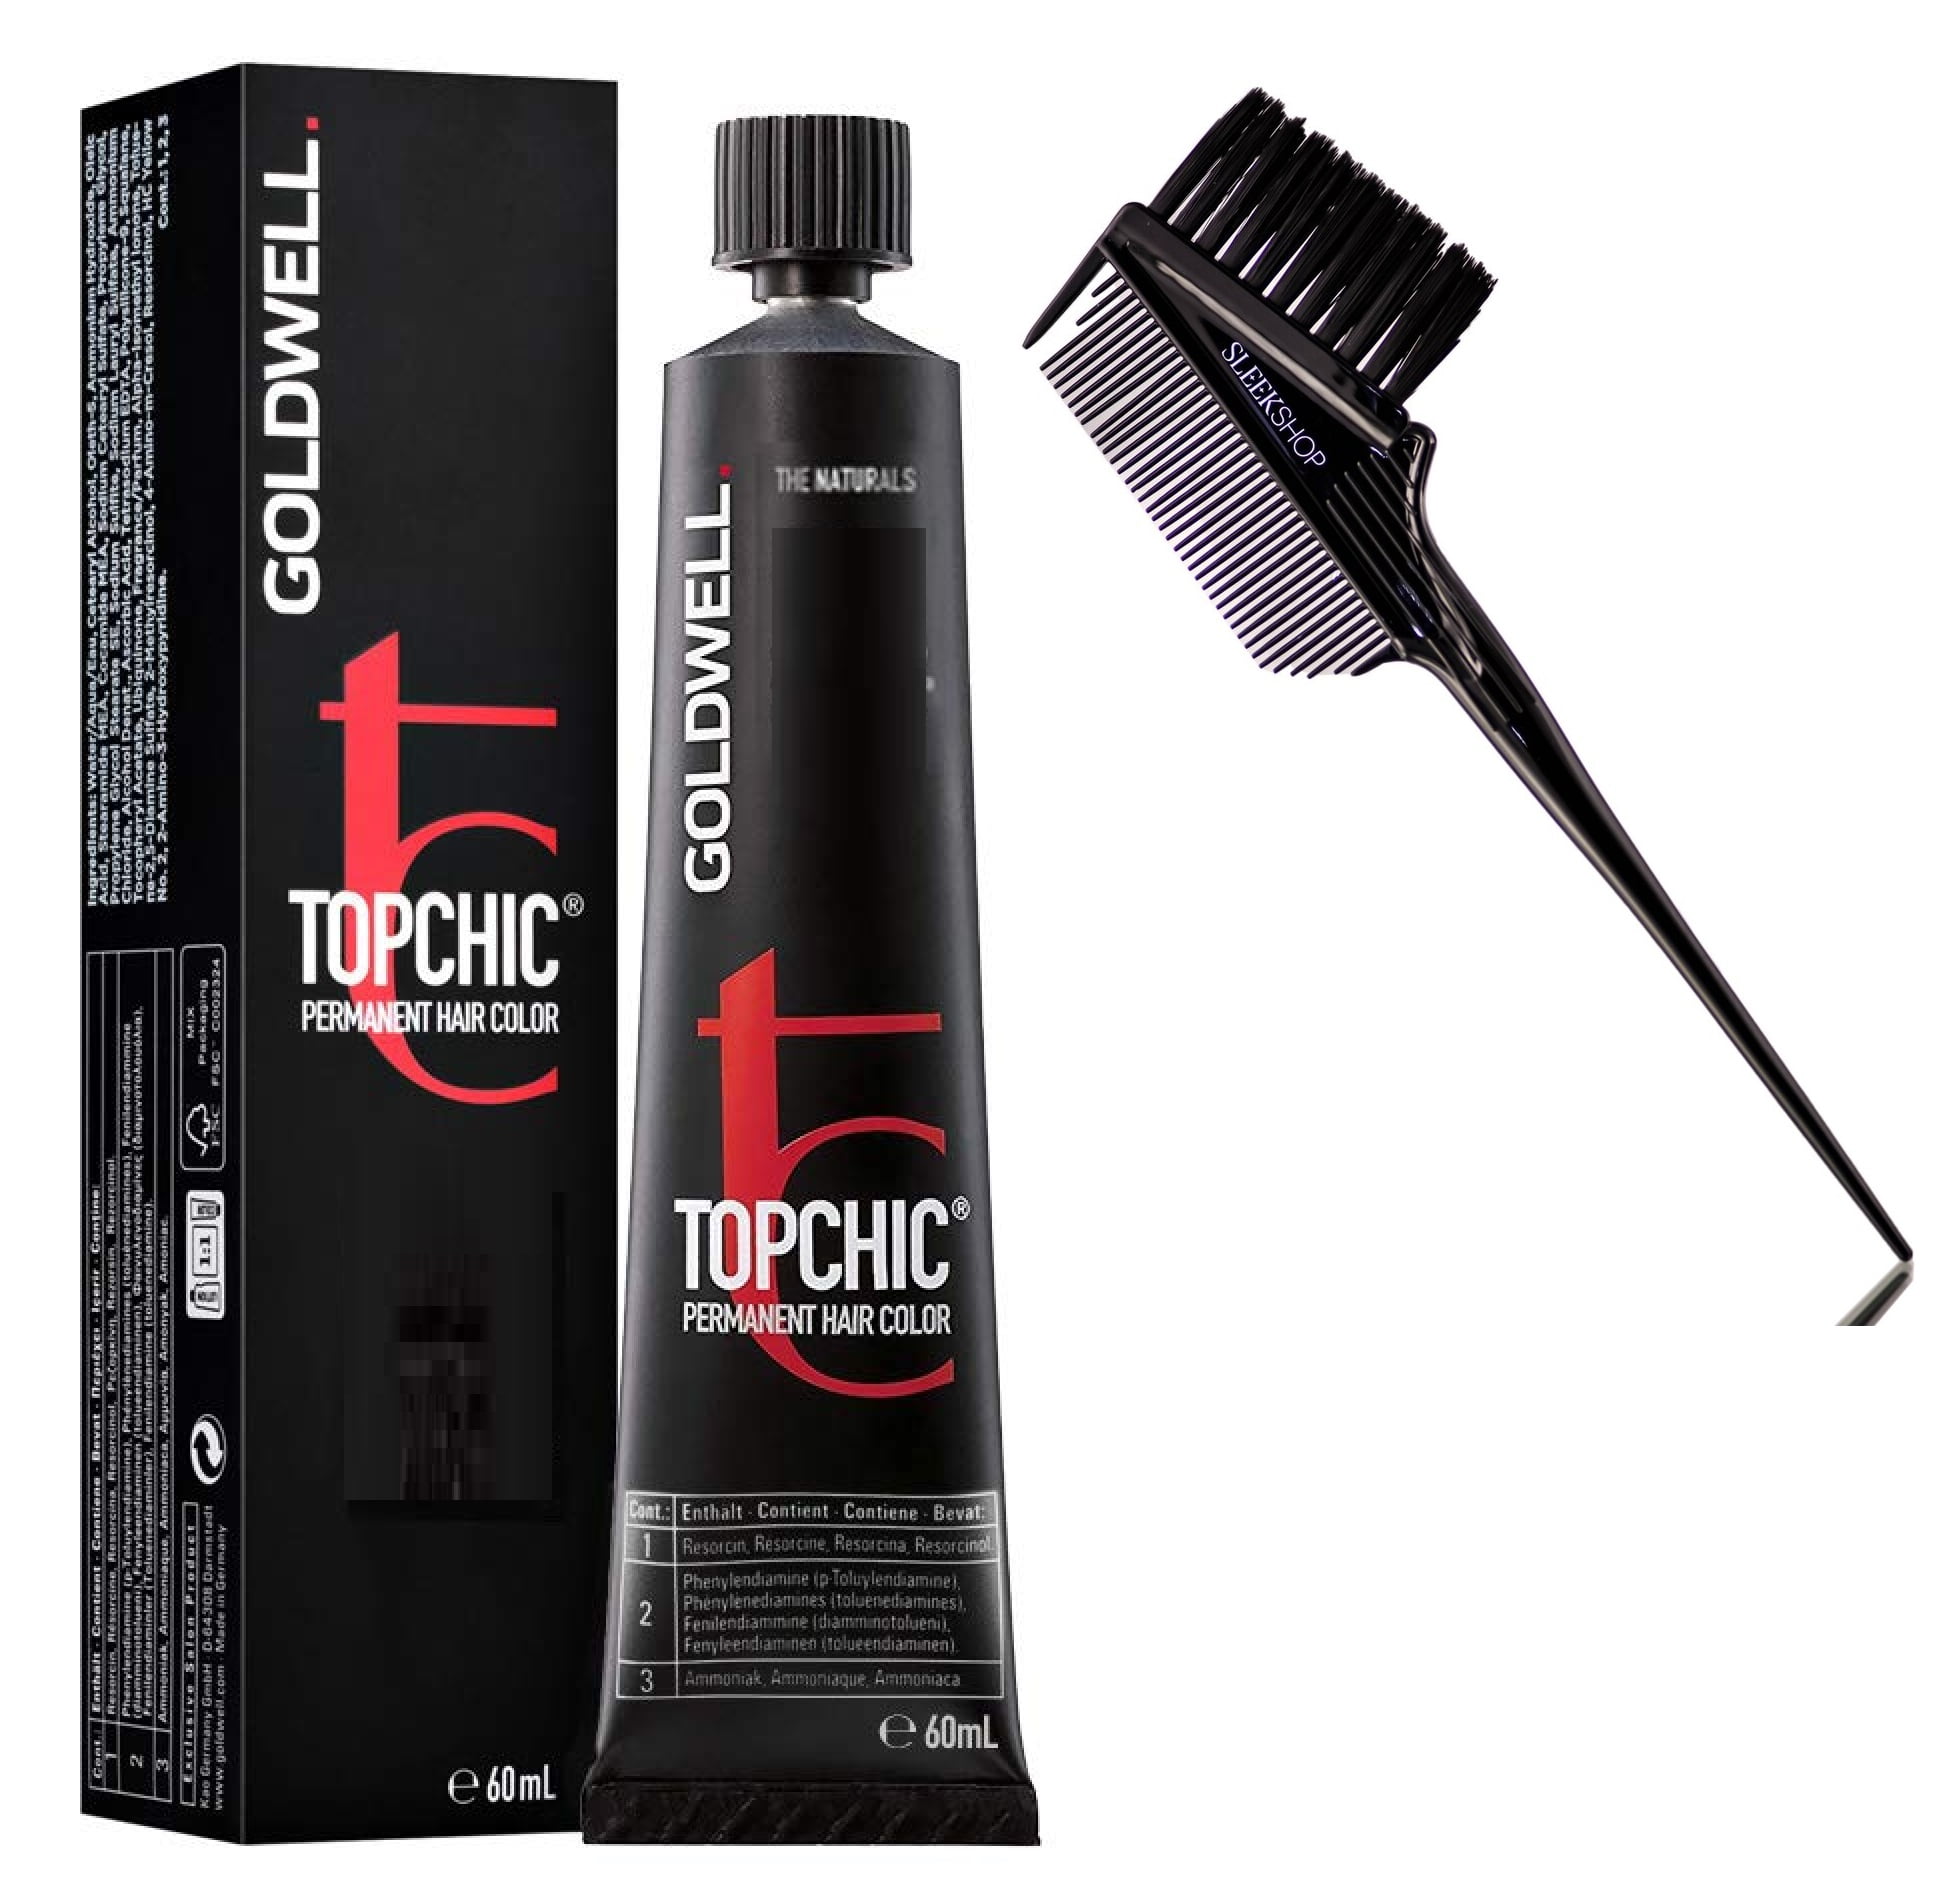 operator zuiverheid heel 8NN : GOLDWELL TOPCHIC Professional Hair Color (2.1 oz tube) Topchick Top  Chic Chick Haircolor Dye - Pack of 2 w/ Sleek 3-in-1 Comb-Brush -  Walmart.com